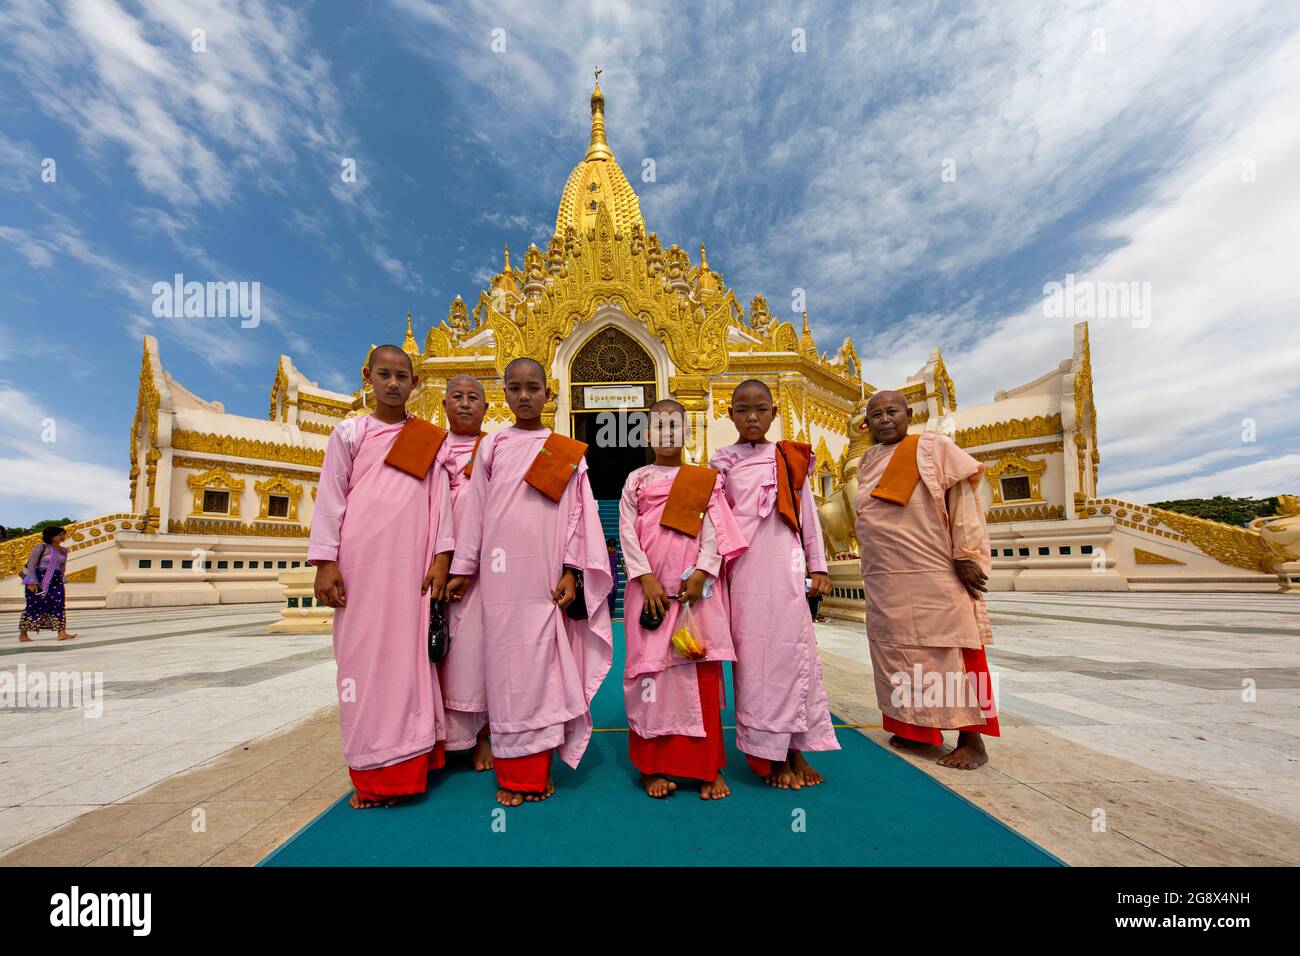 Junge Mönche am Tempel der Zahnpagode in Yangon, Myanmar Stockfoto